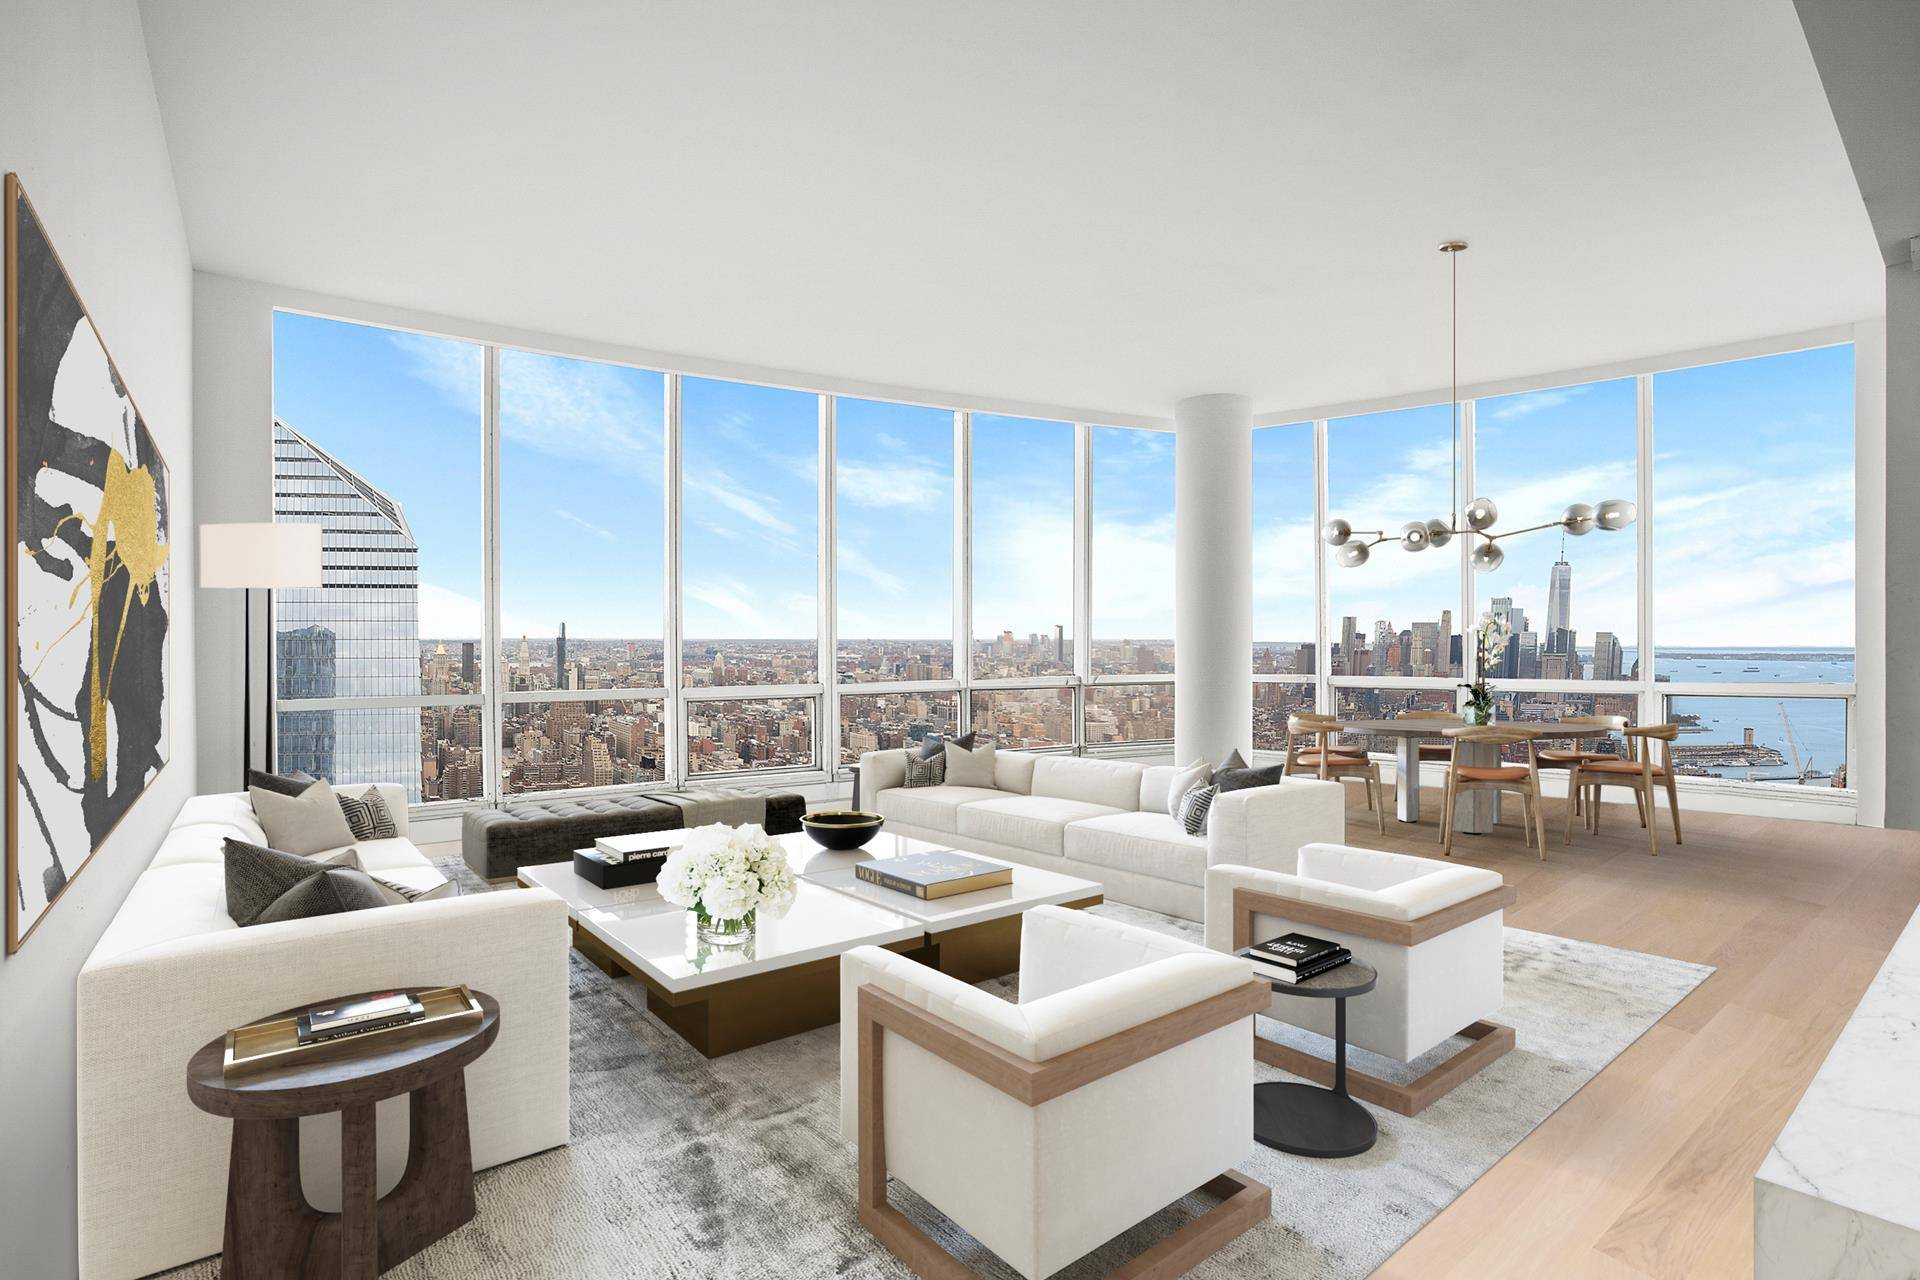 High floor corner three bedroom, 2, 353 square foot home in New York City's newest neighborhood, Hudson Yards.